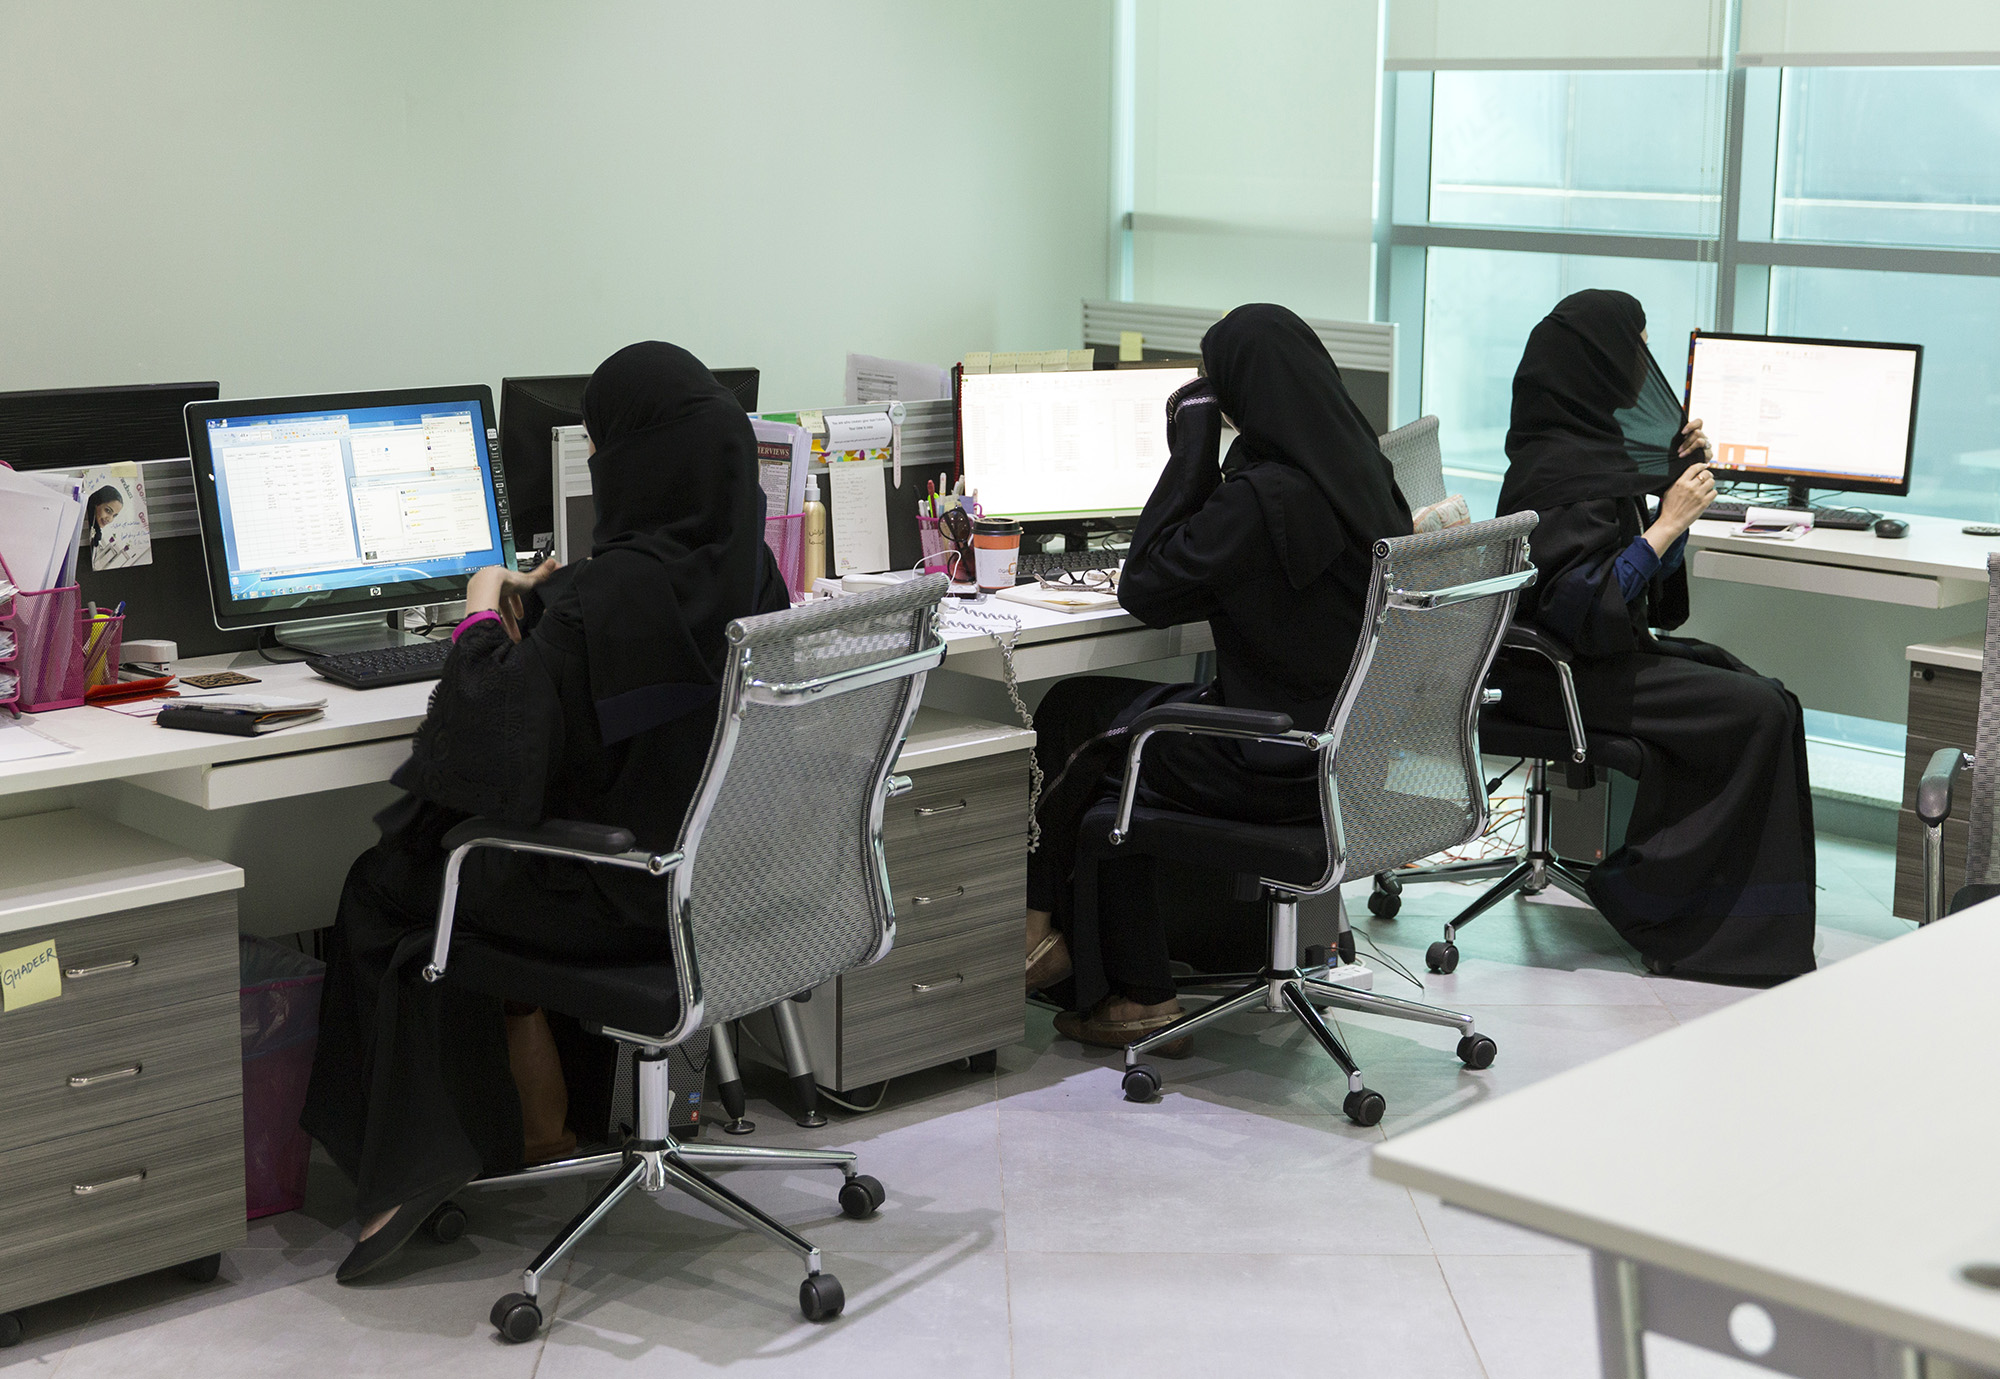 Saudi Arabia 2021: Women at Work Climbing Fast in Conservative. www.bloombe...